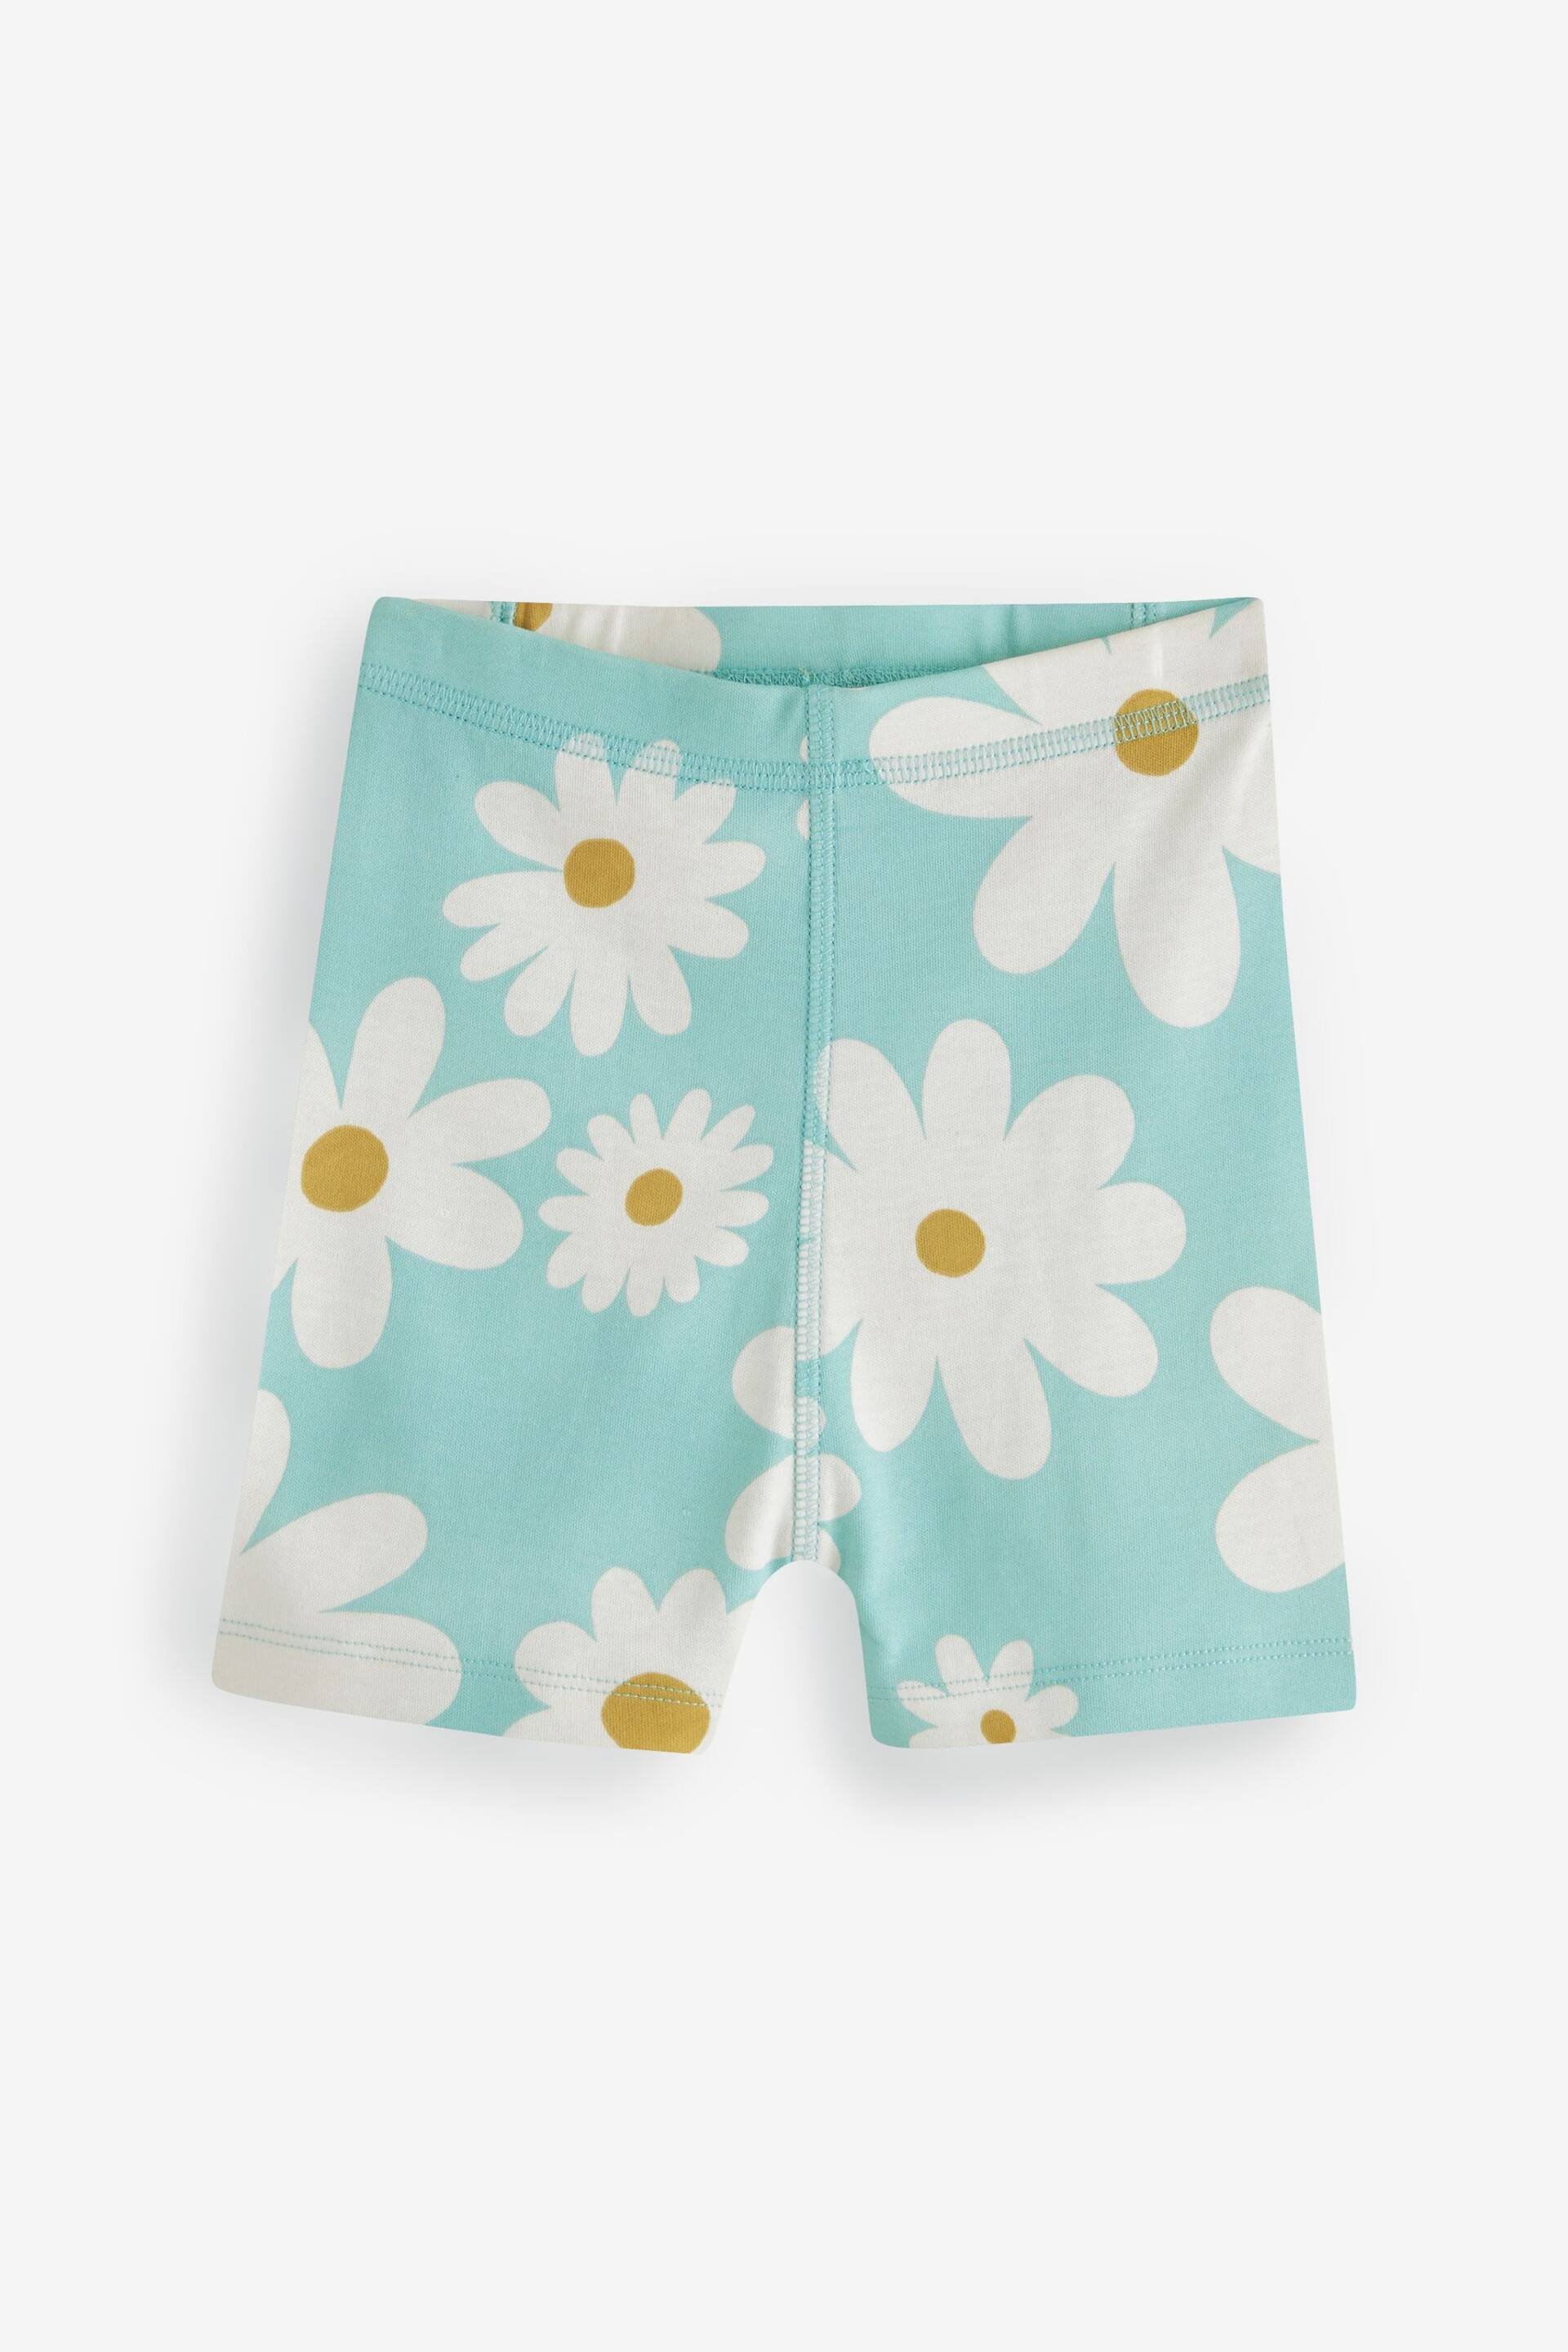 Multi Floral Short Pyjamas 3 Pack (9mths-12yrs) - Image 5 of 8